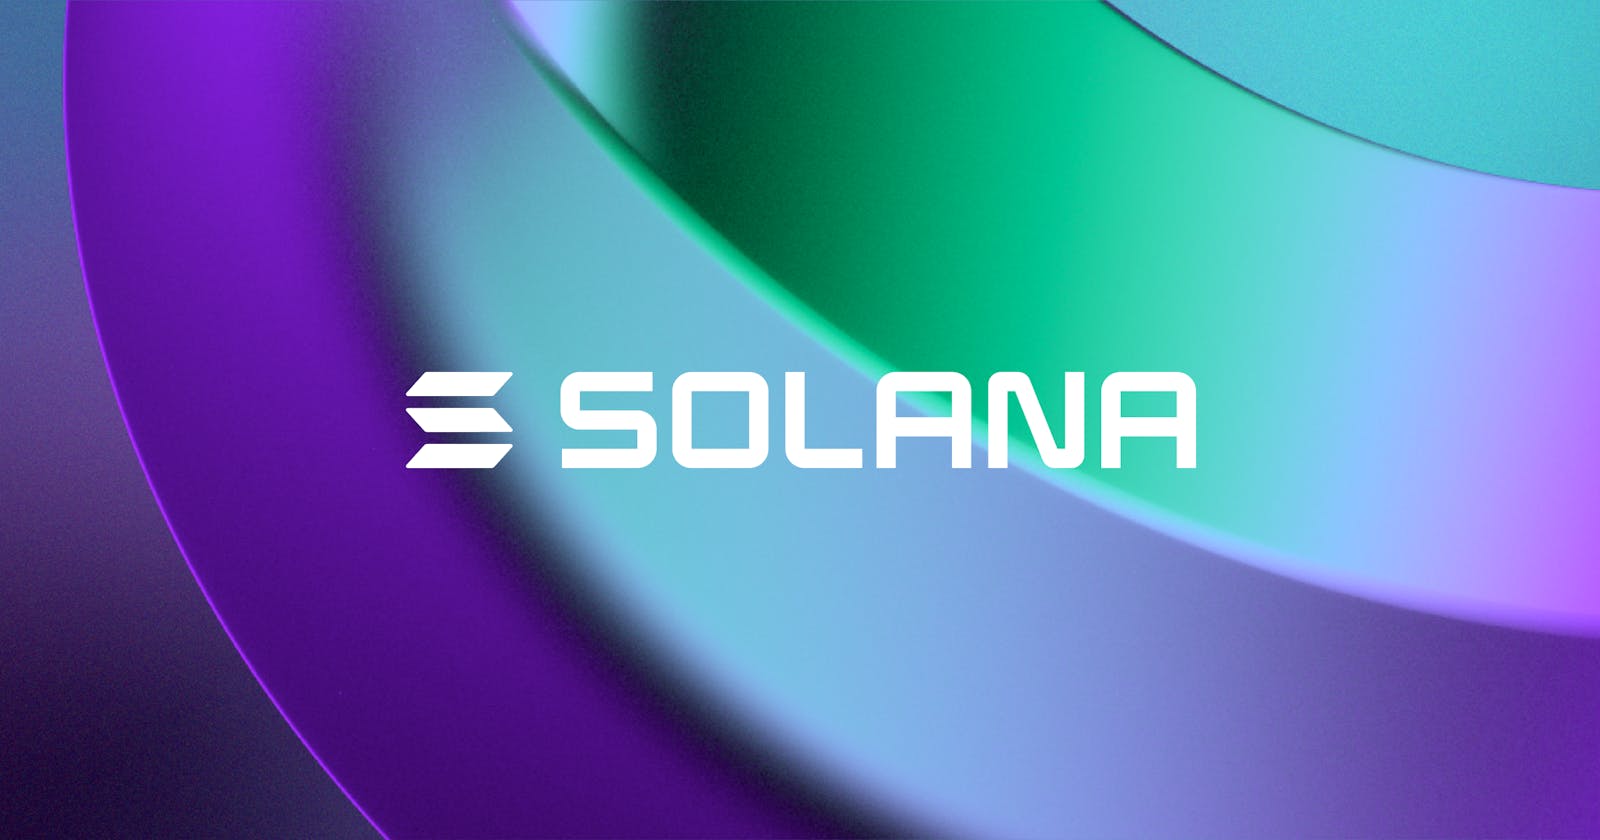 Introduction to Solana Blockchain